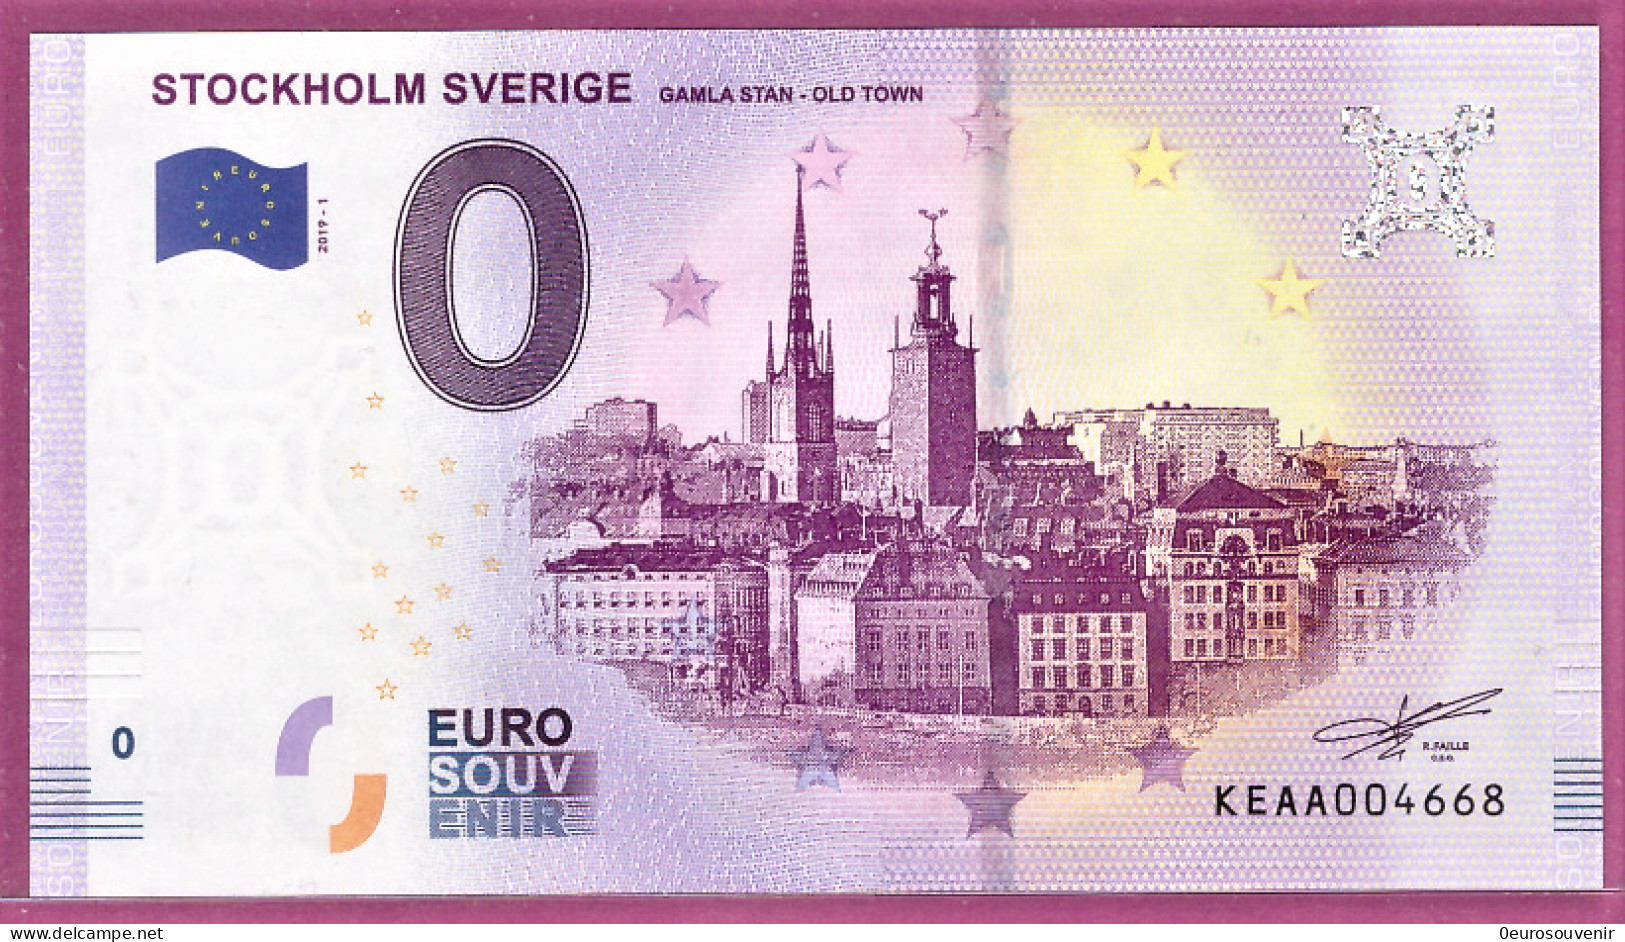 0-Euro KEAA 2019-1 STOCKHOLM SVERIGE - GAMLA STAN - OLD TOWN - Essais Privés / Non-officiels